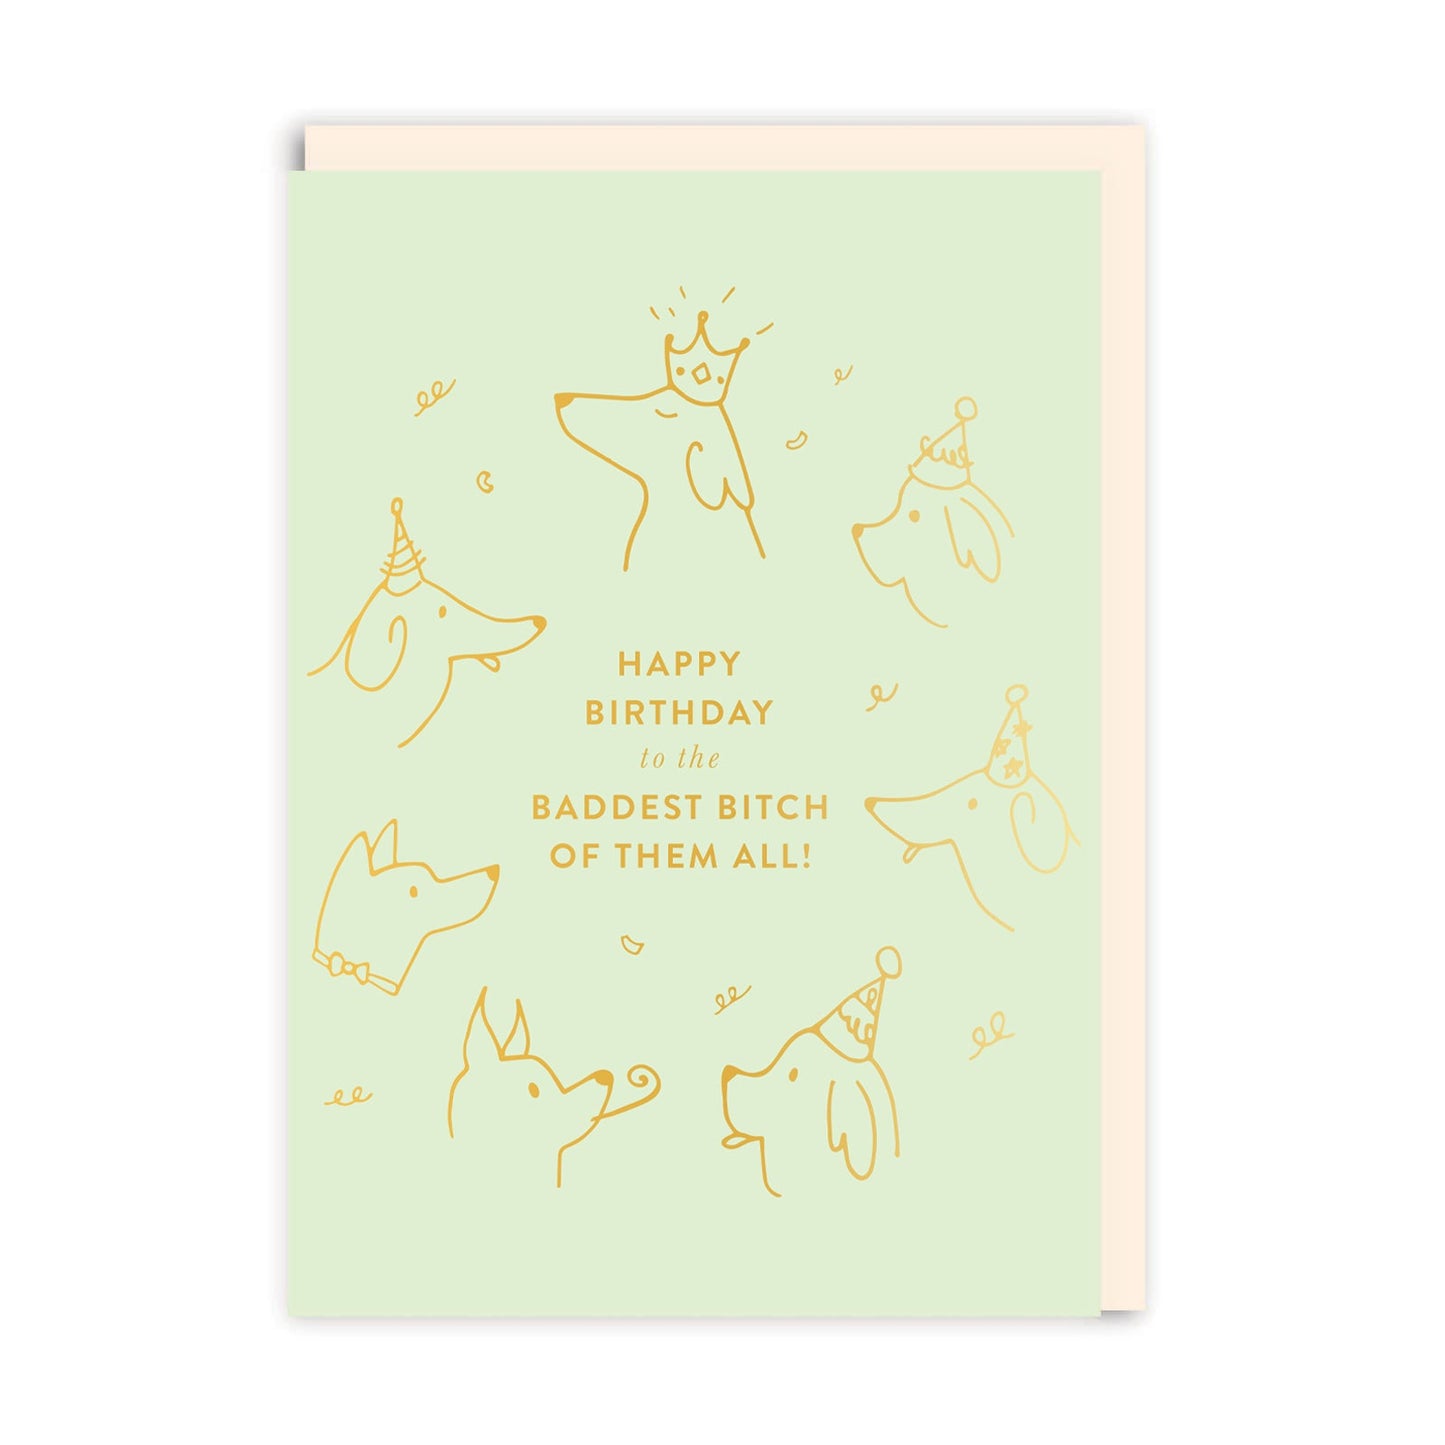 Happy Birthday to the Baddest B*tch Greeting Card, A6